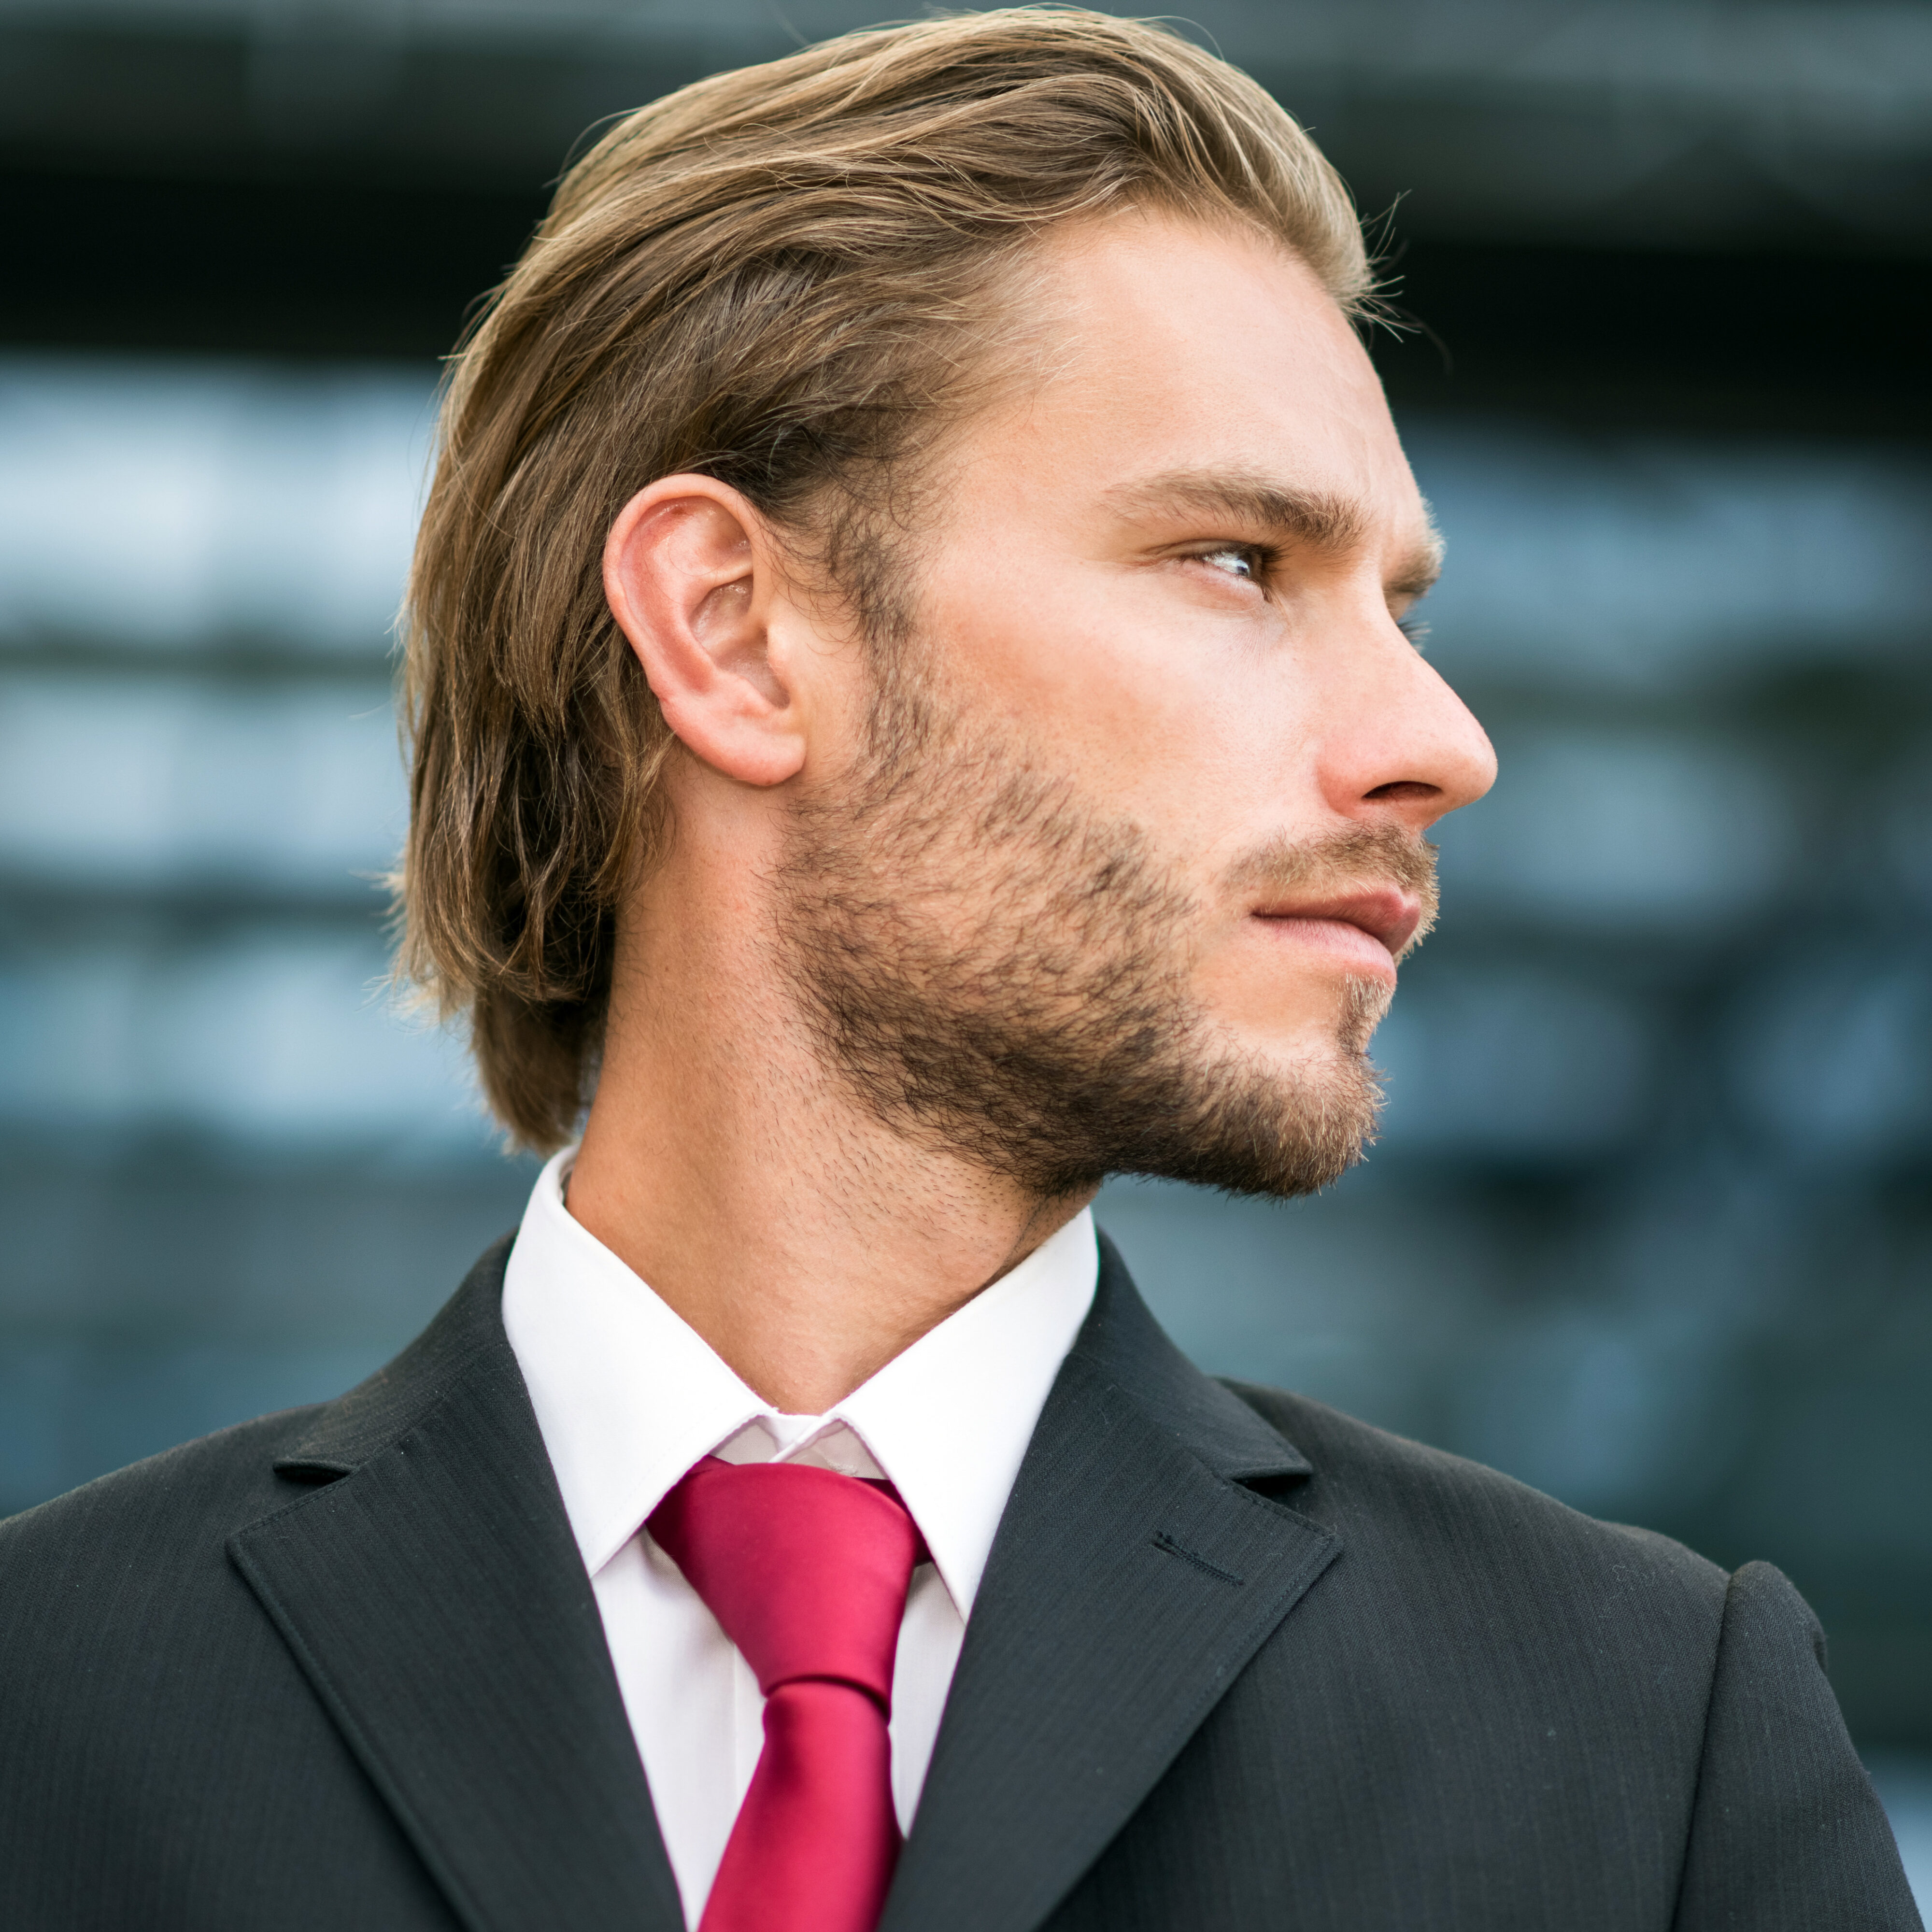 9,476 Long Hair Man Back Images, Stock Photos & Vectors | Shutterstock